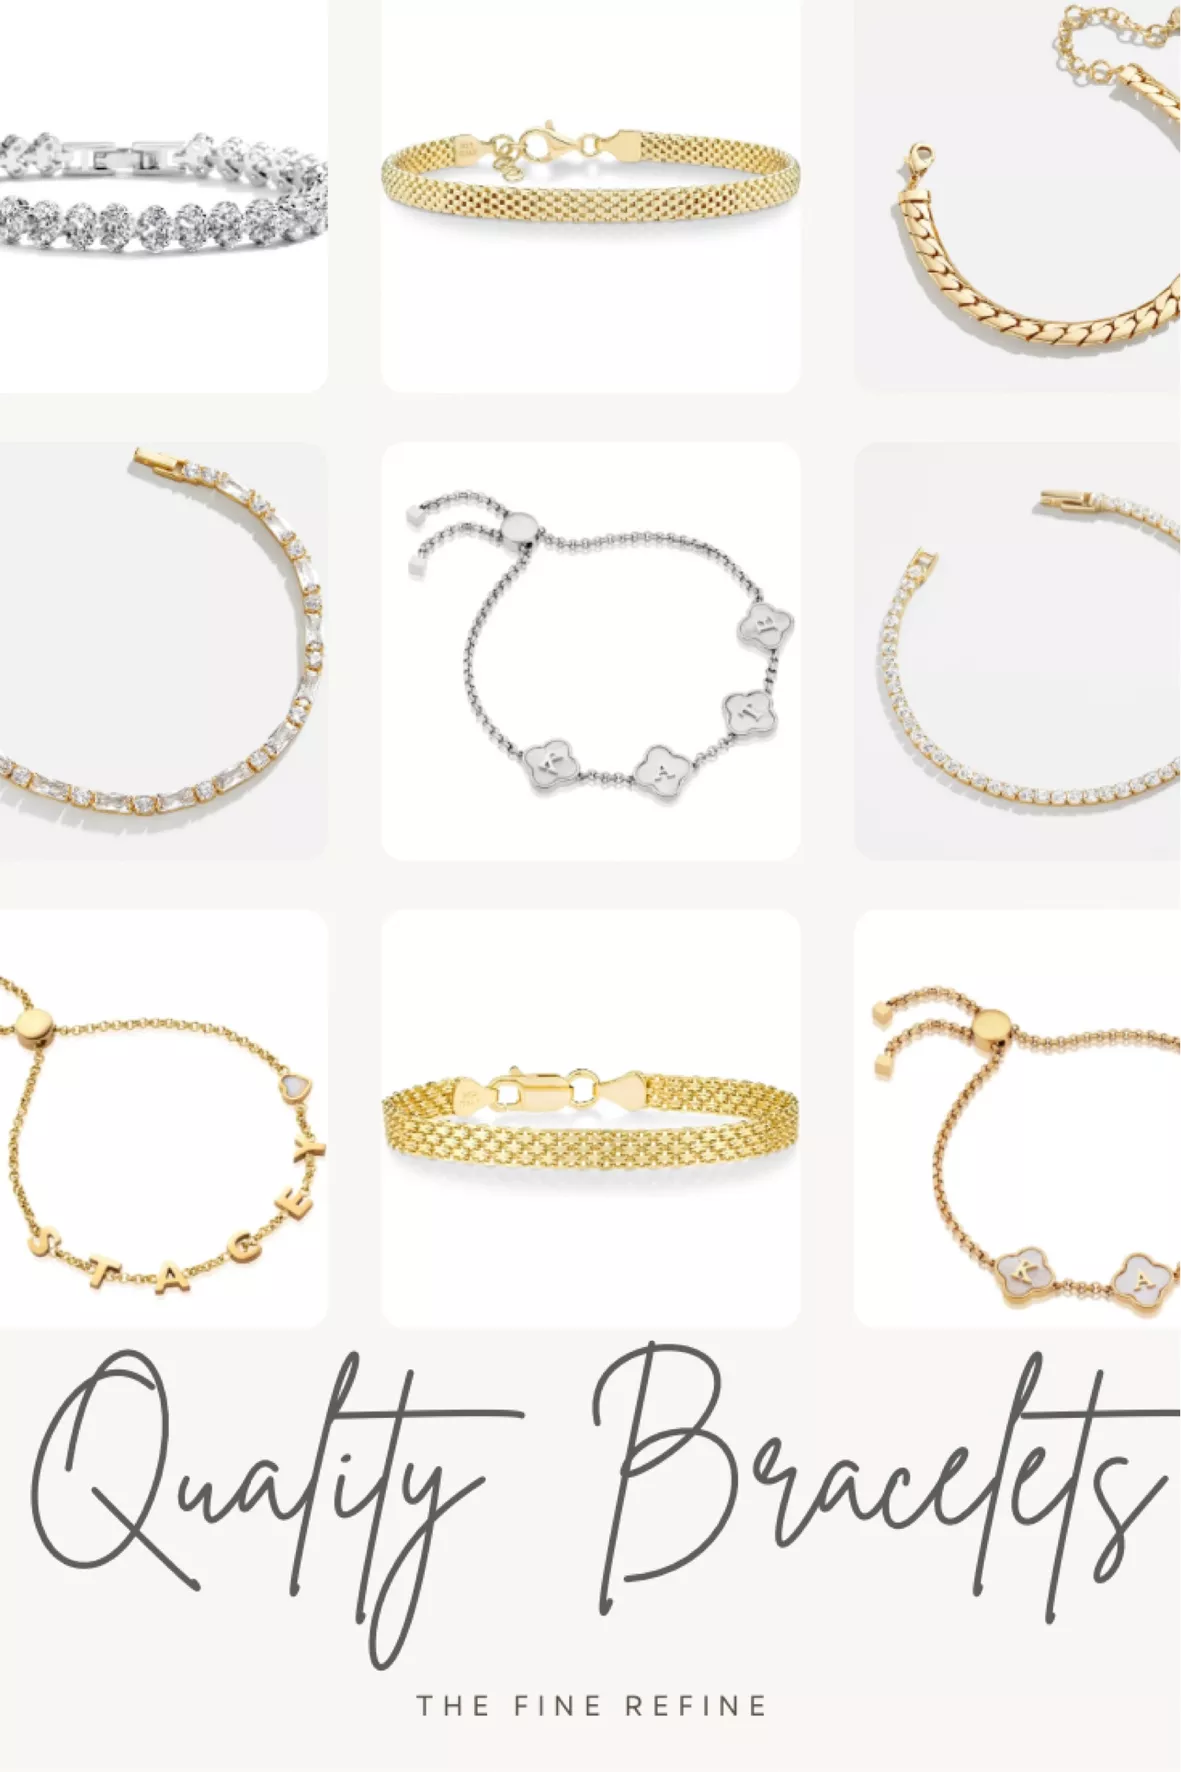 Jewelry that doesn't break the bank✨ #jewelry